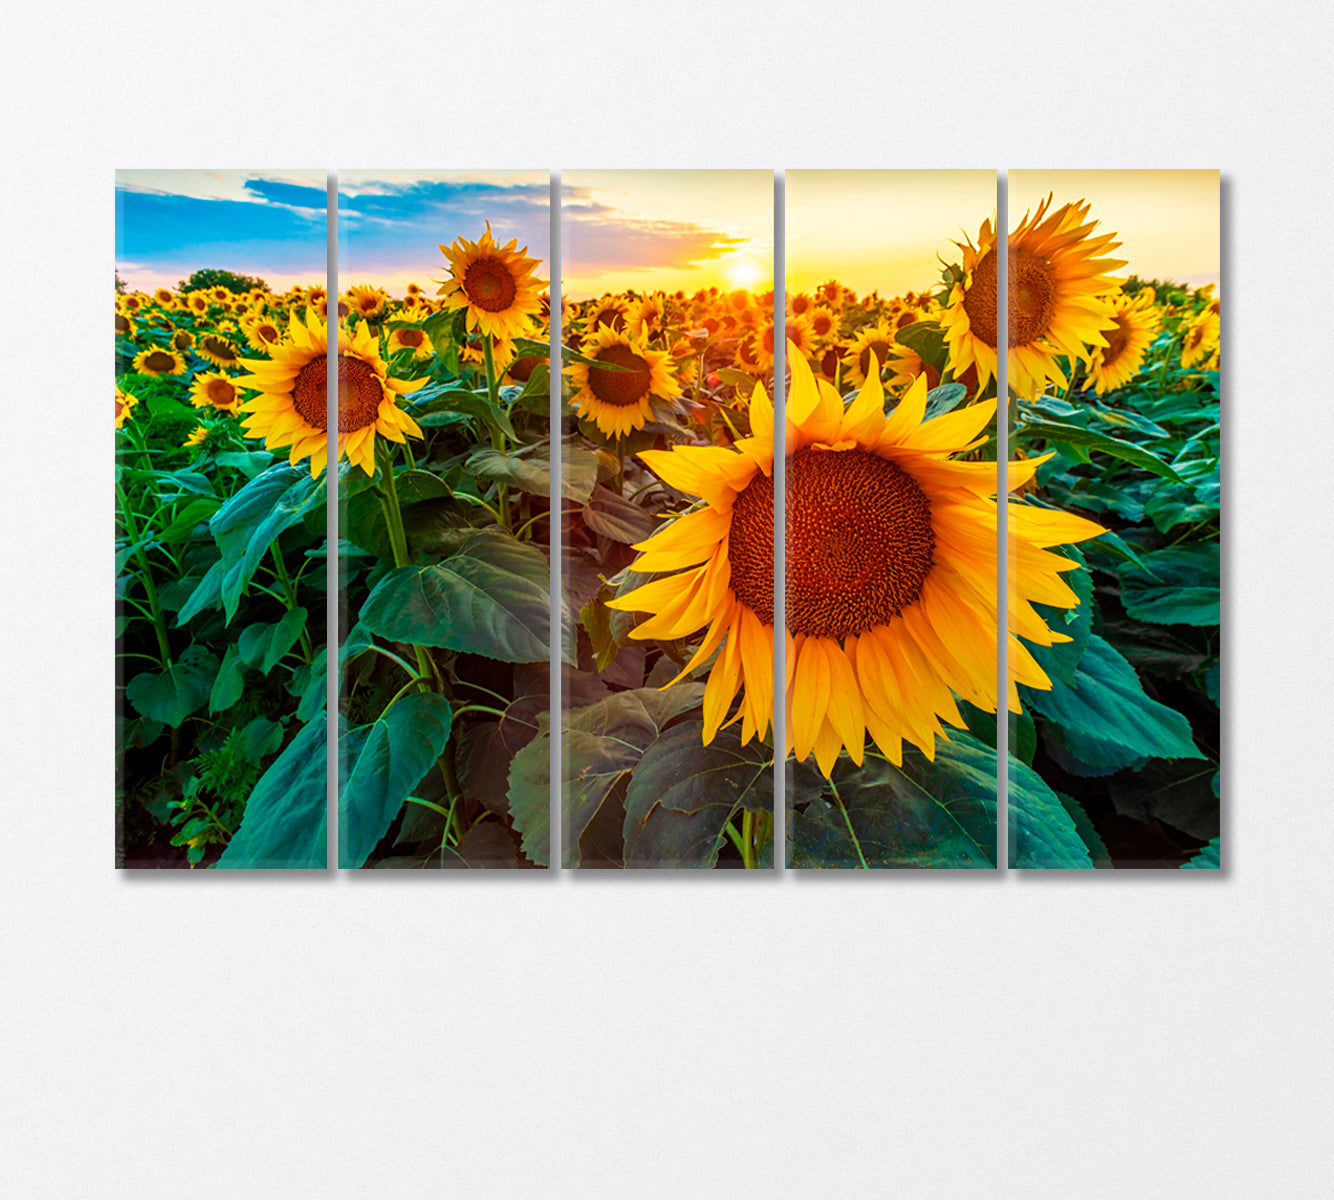 Sunflower Fields at Sunset Canvas Print-Canvas Print-CetArt-5 Panels-36x24 inches-CetArt